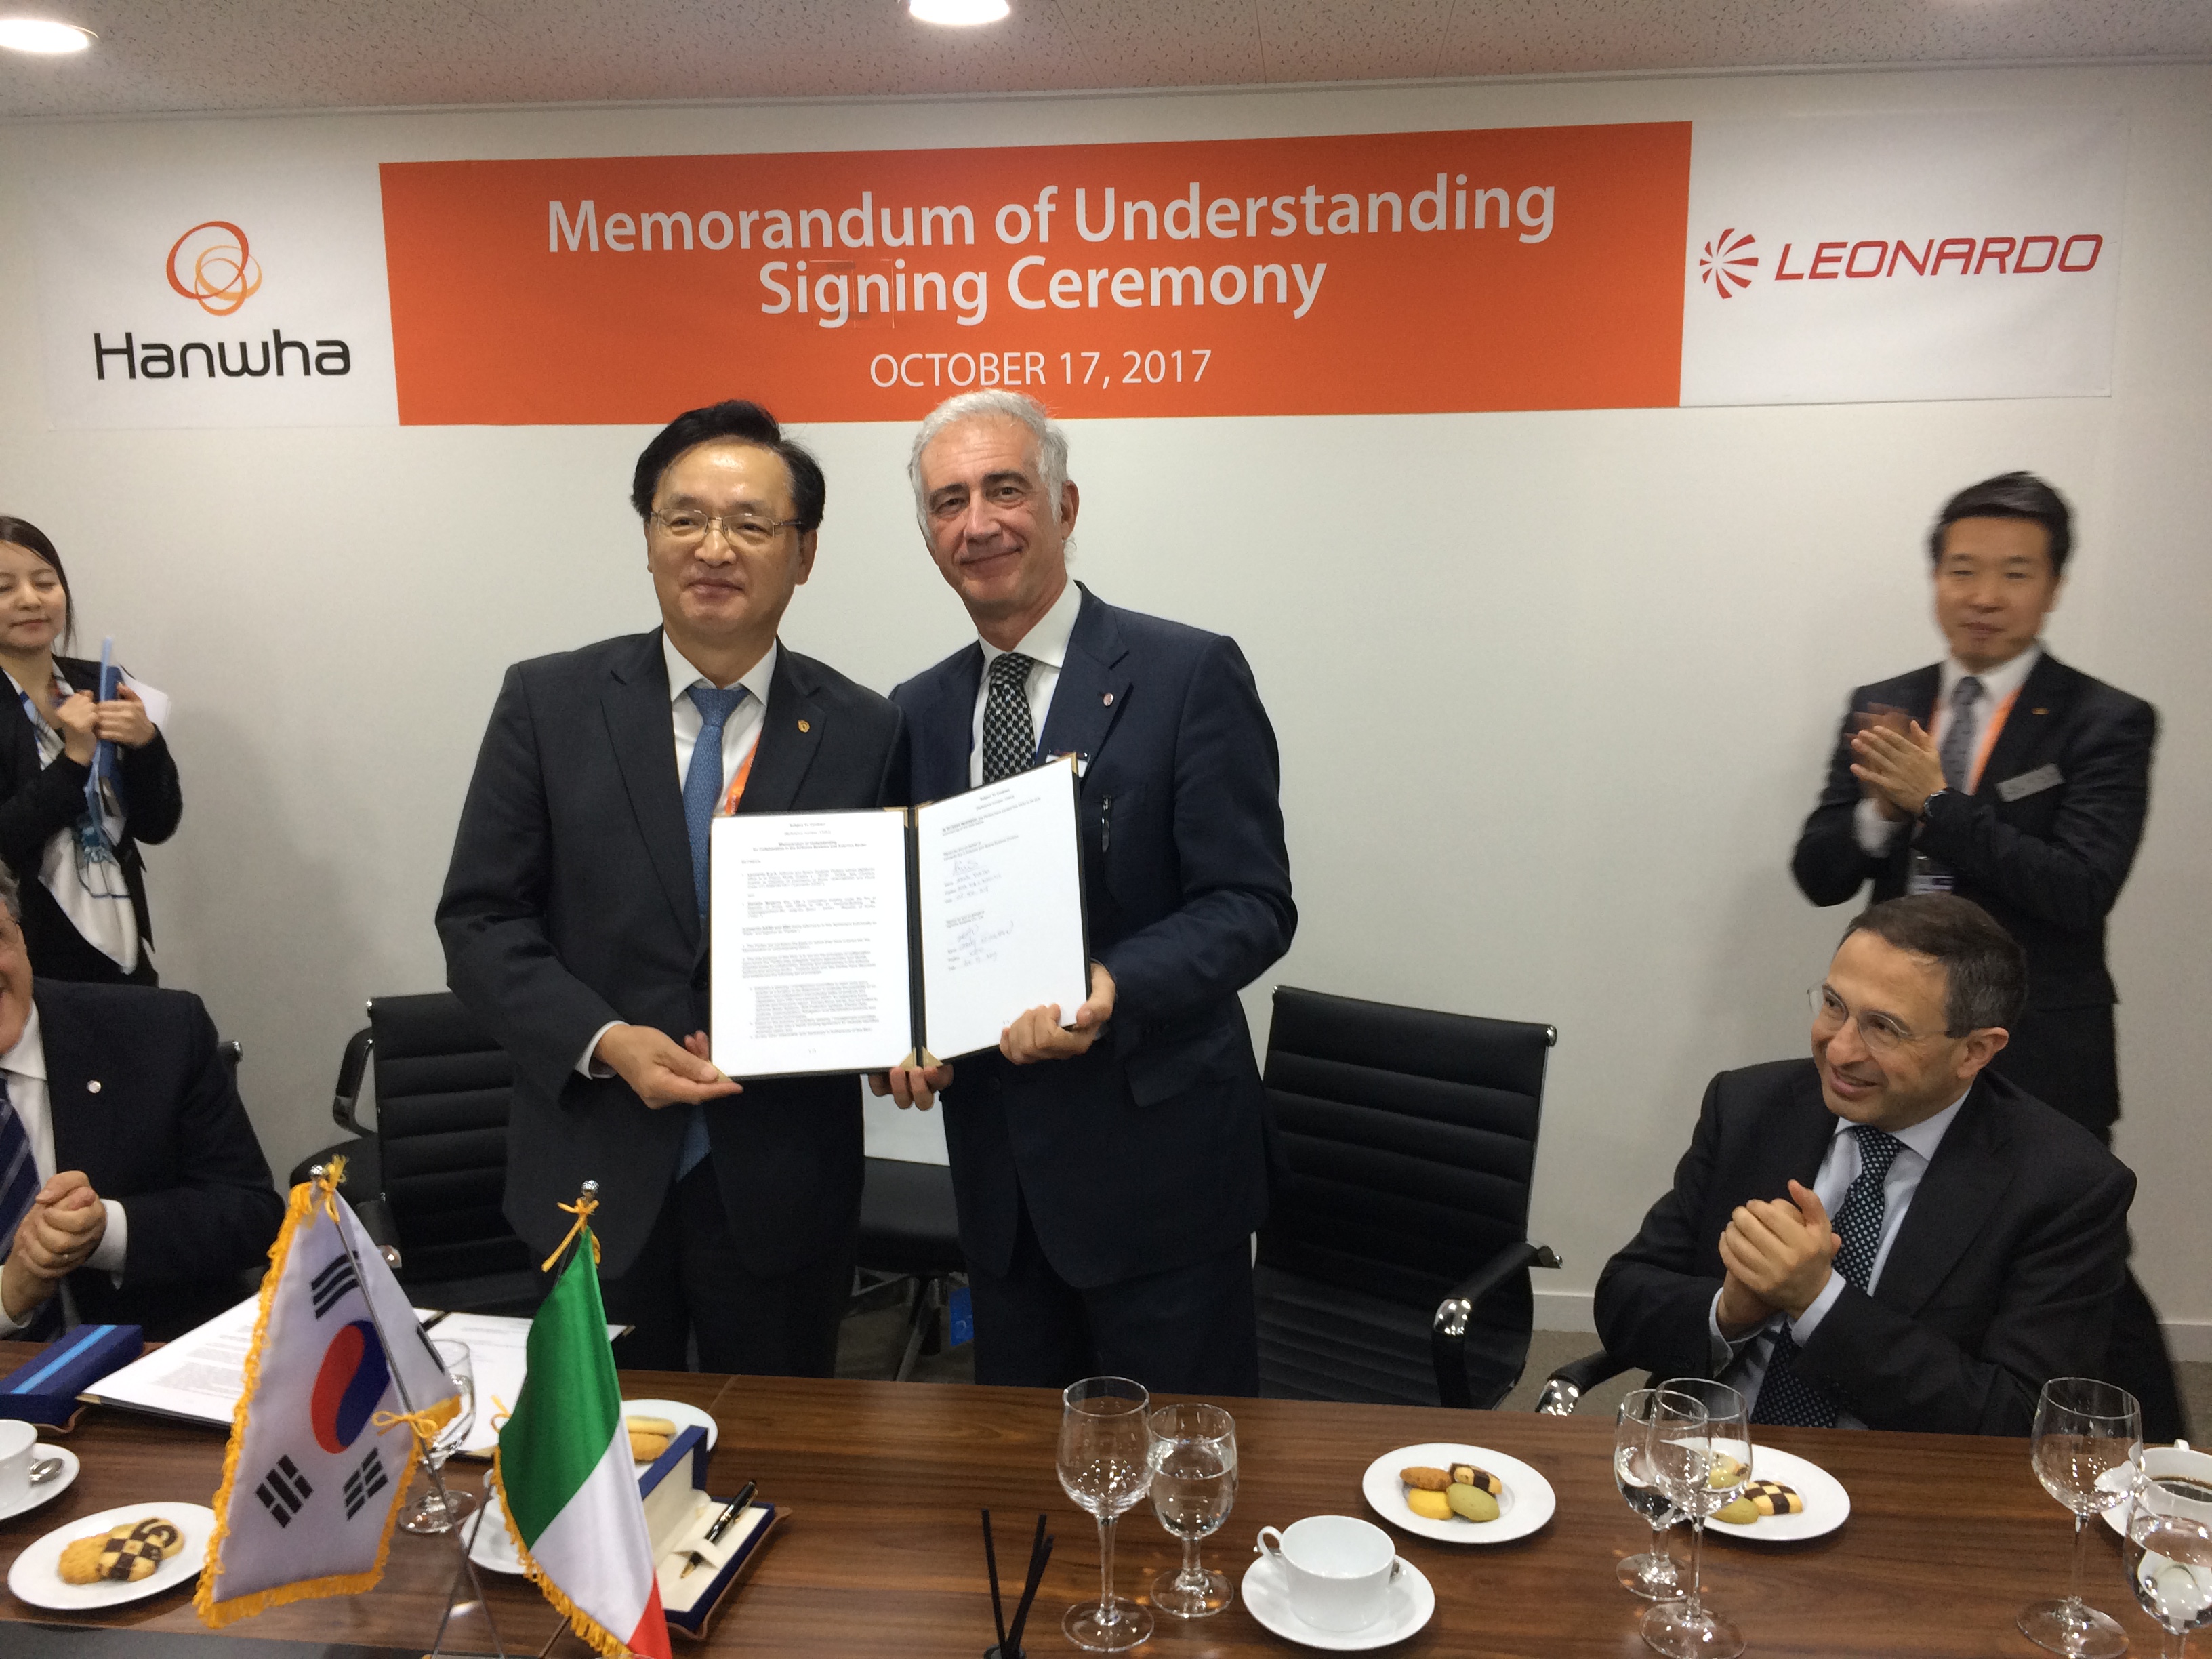 Leonardo-Hanwha signing ceremony.JPG